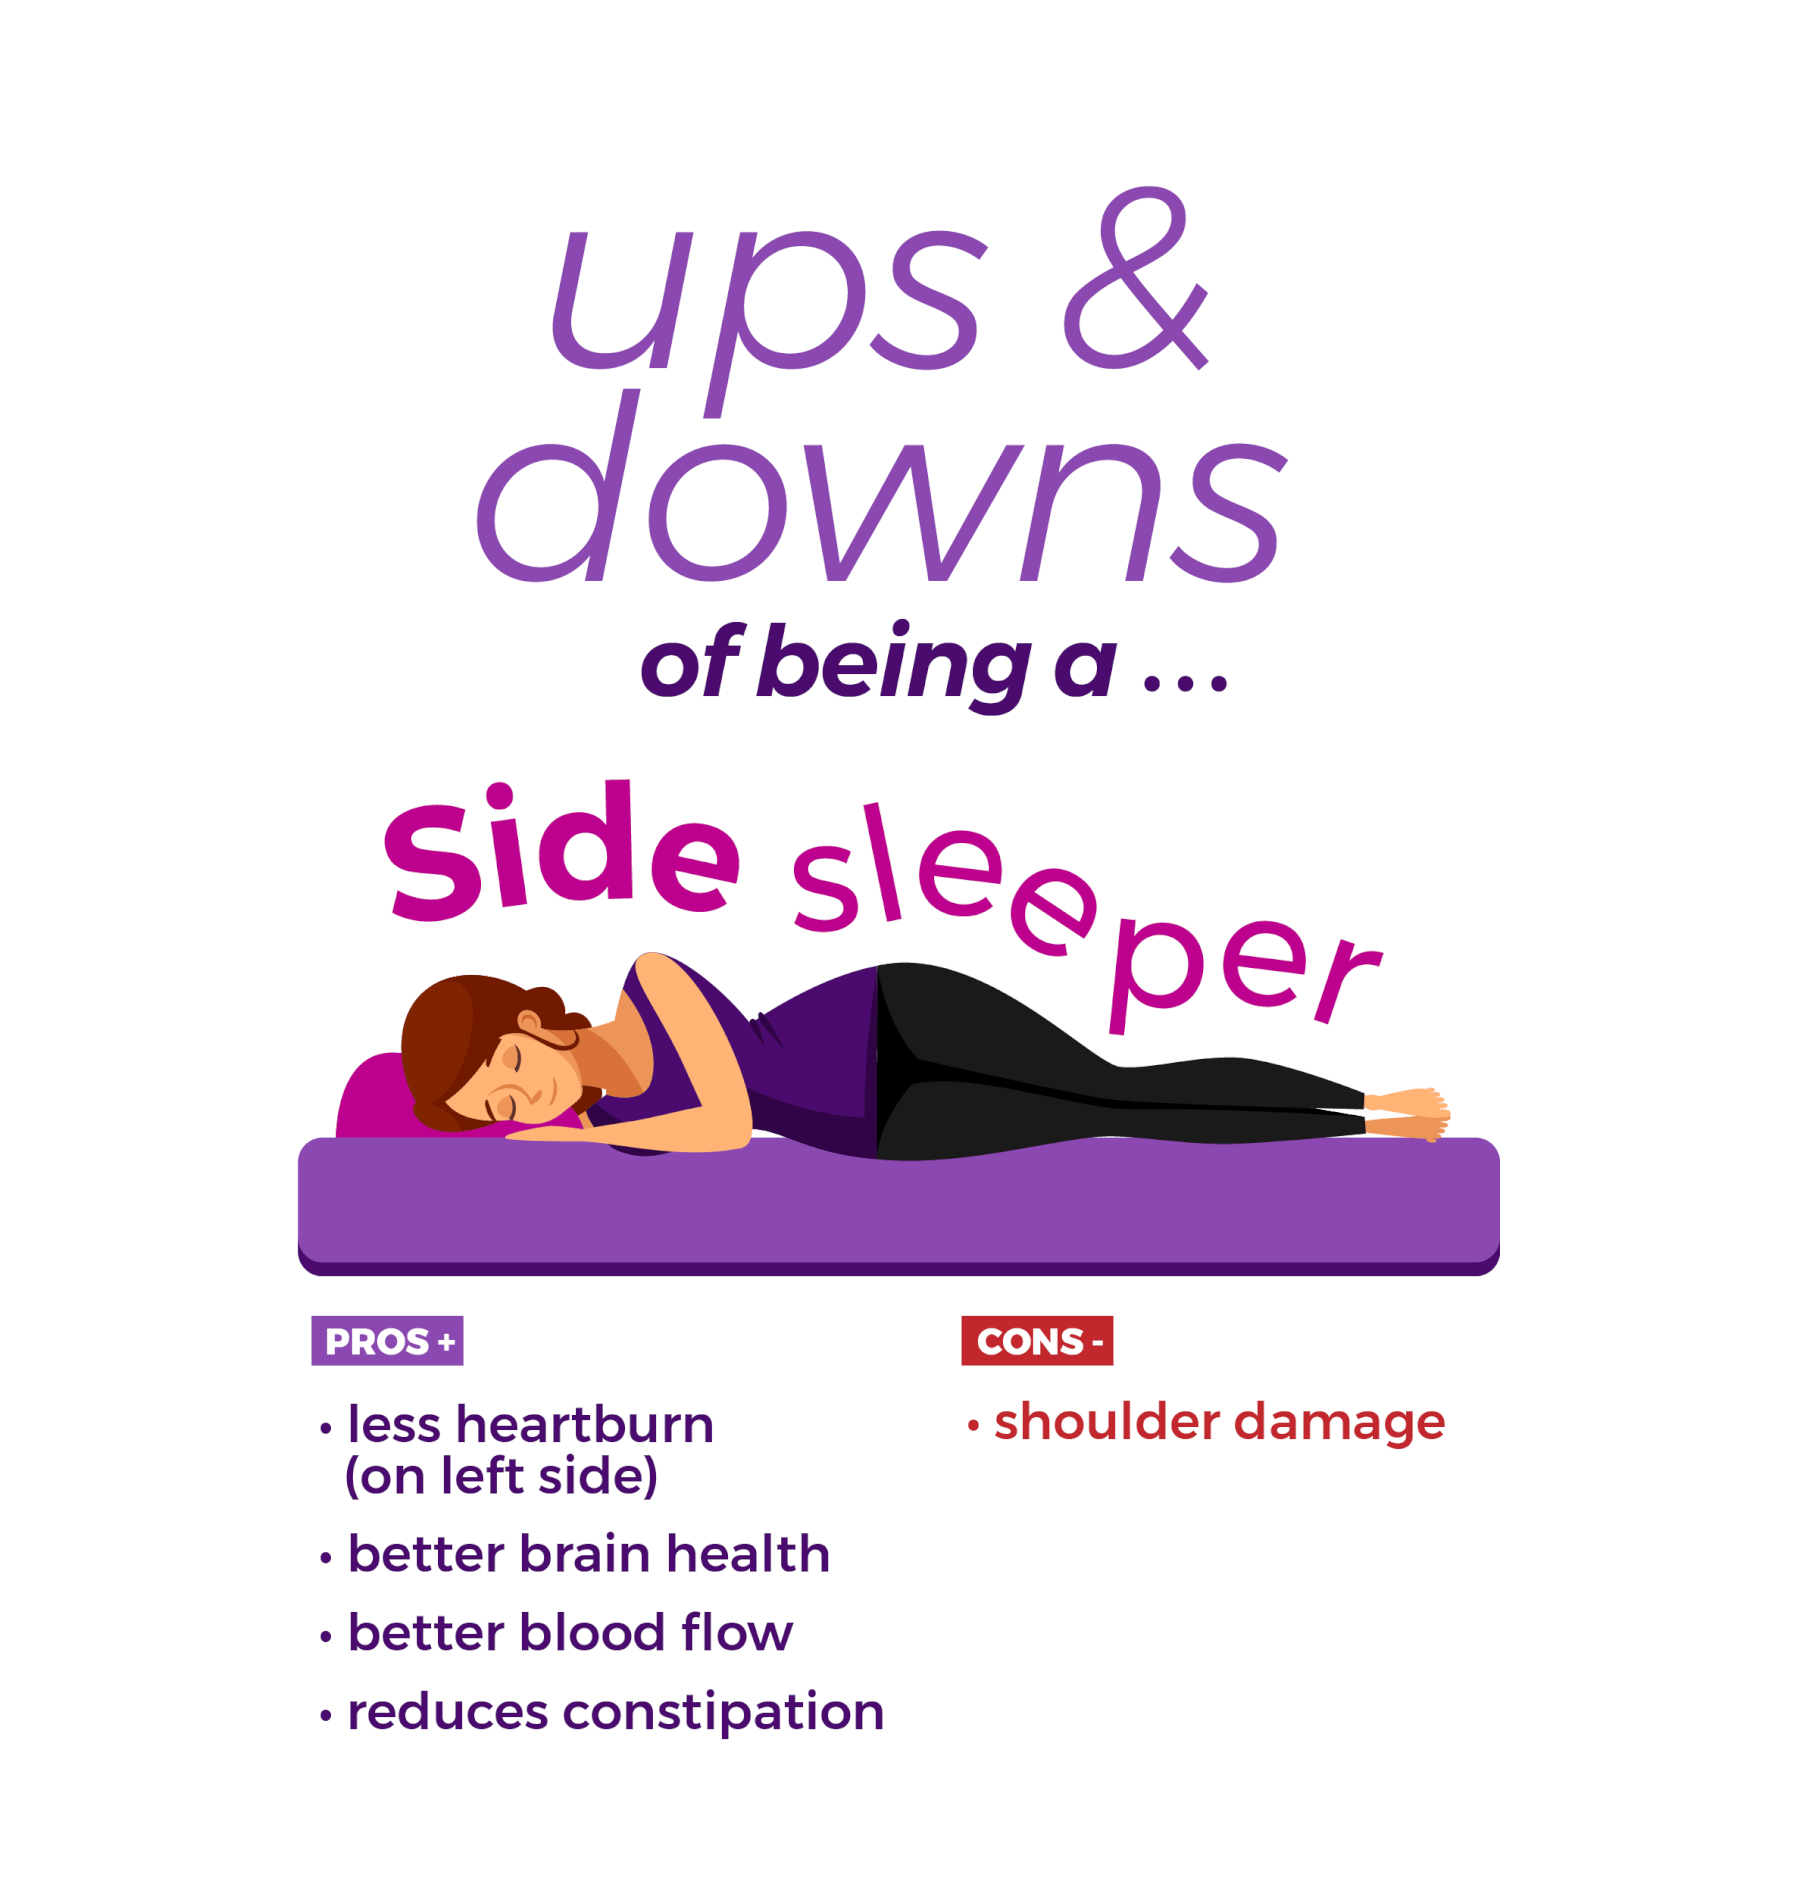 Back Sleeper Guide: Dr. Tips & Benefits - Purple